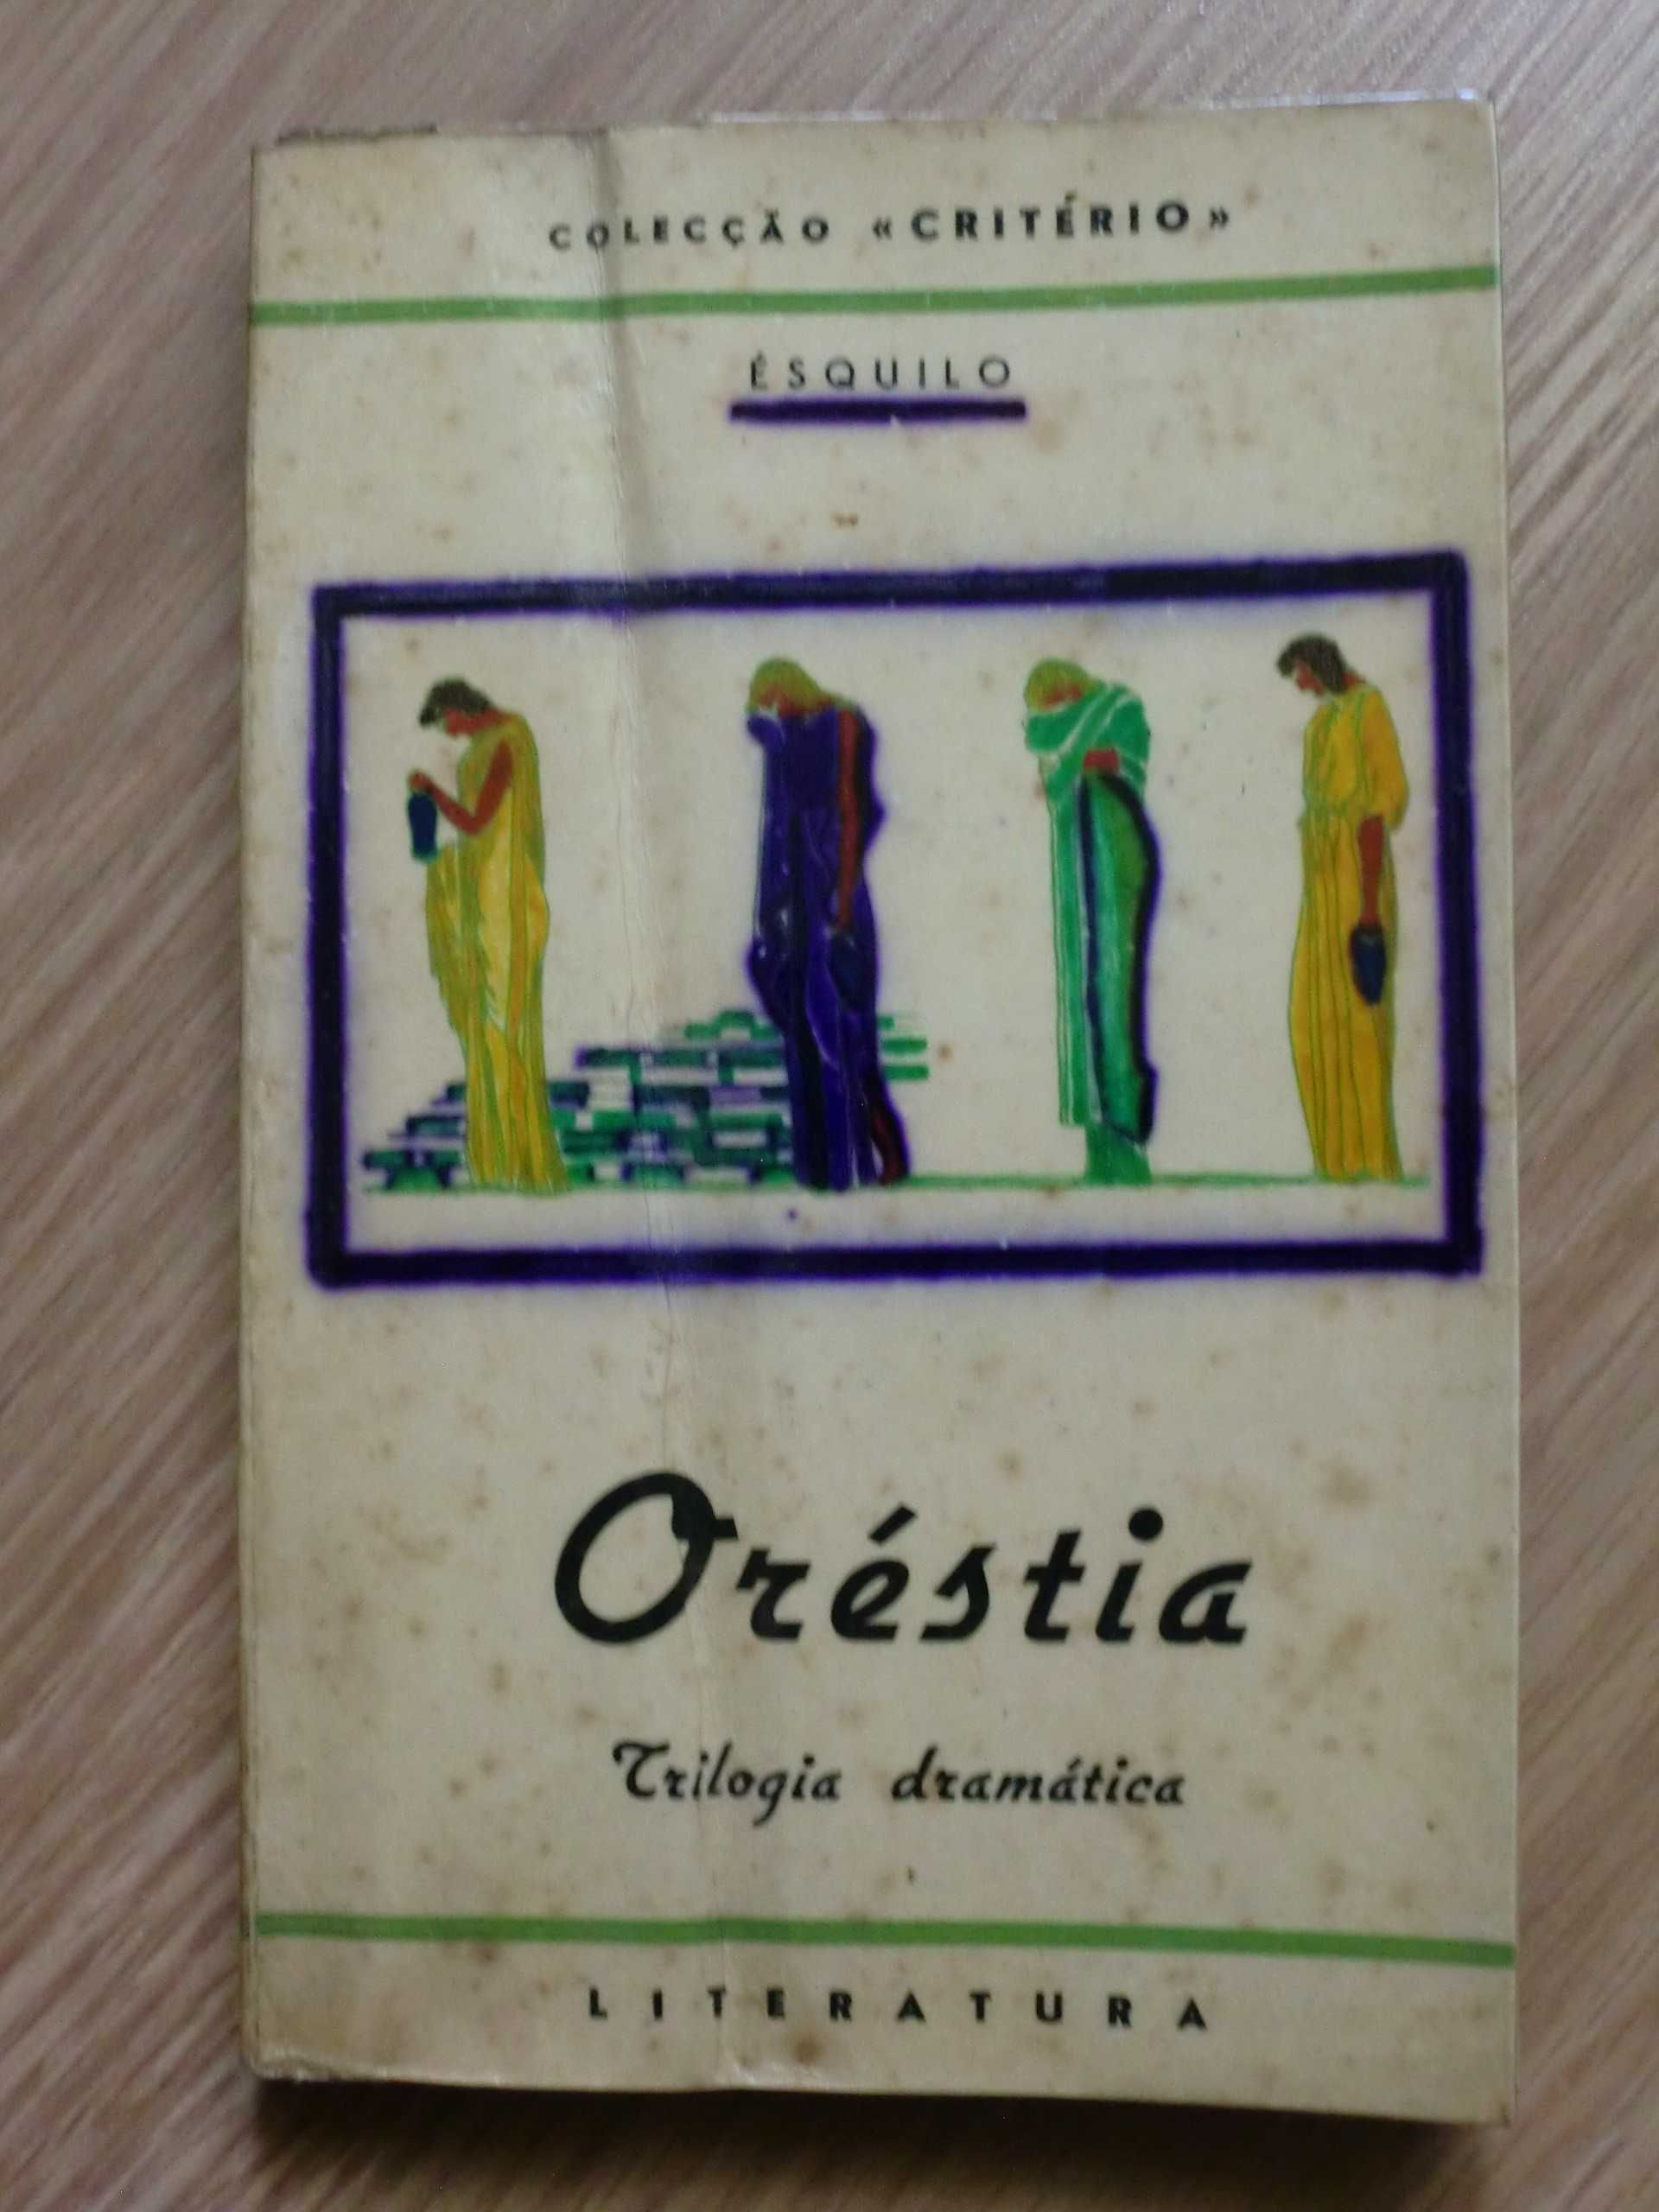 Oréstia - Trilogia dramática de Ésquilo